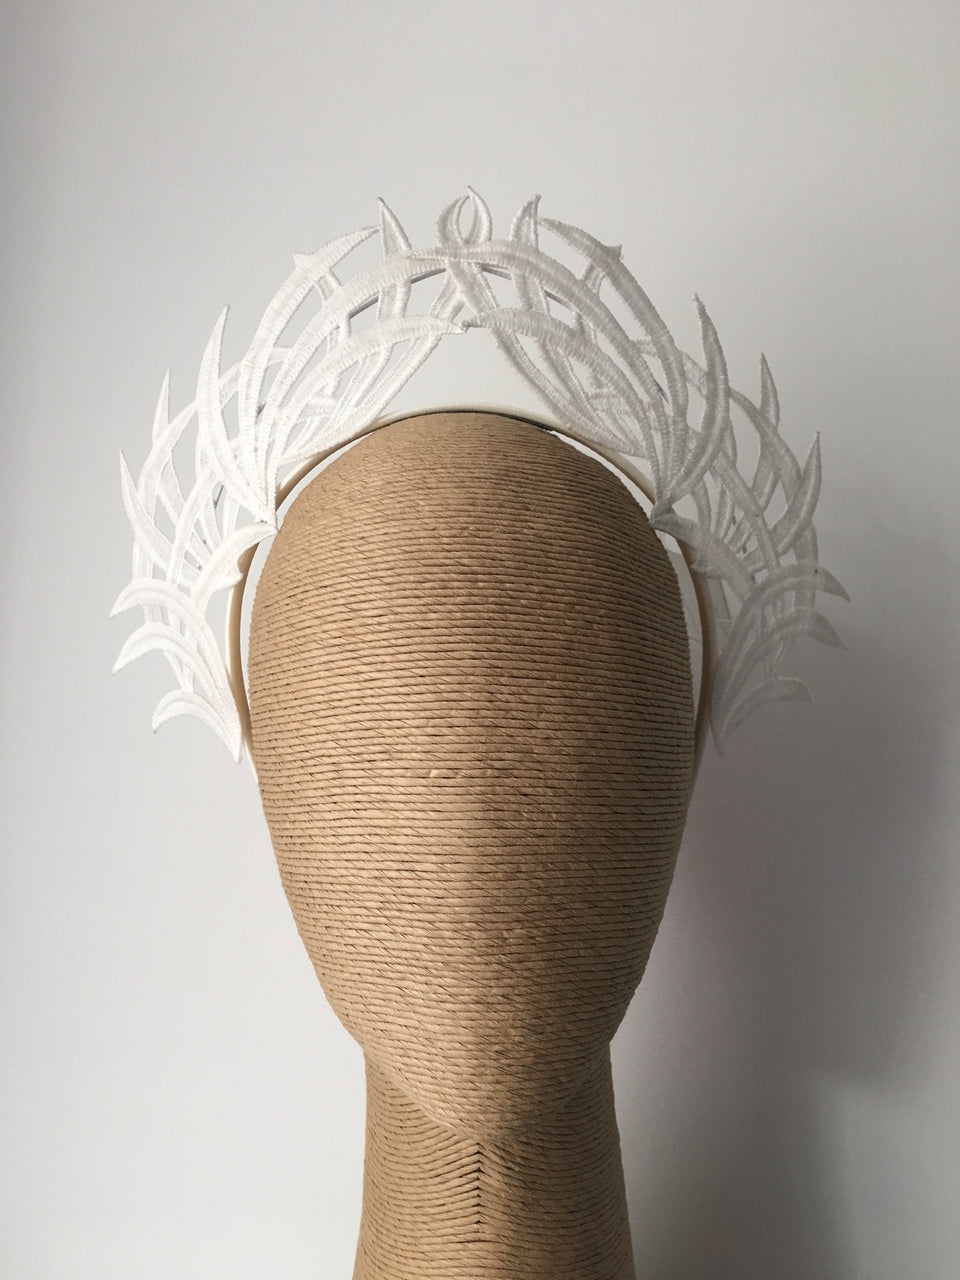 Max Alexander Ivory Lace Crown Headpiece on a Headband